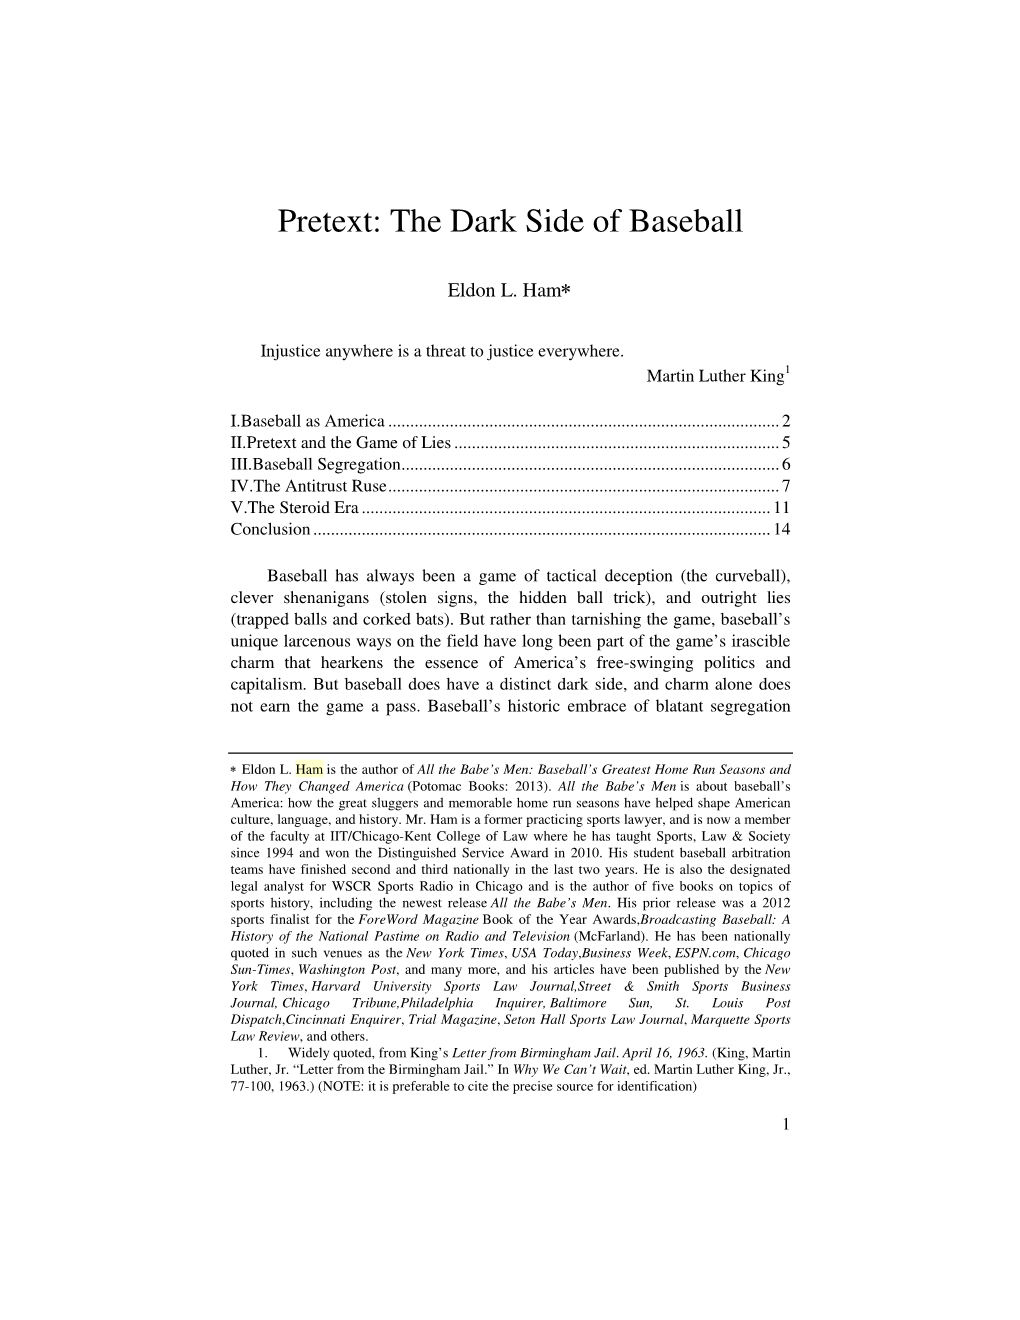 Pretext: the Dark Side of Baseball